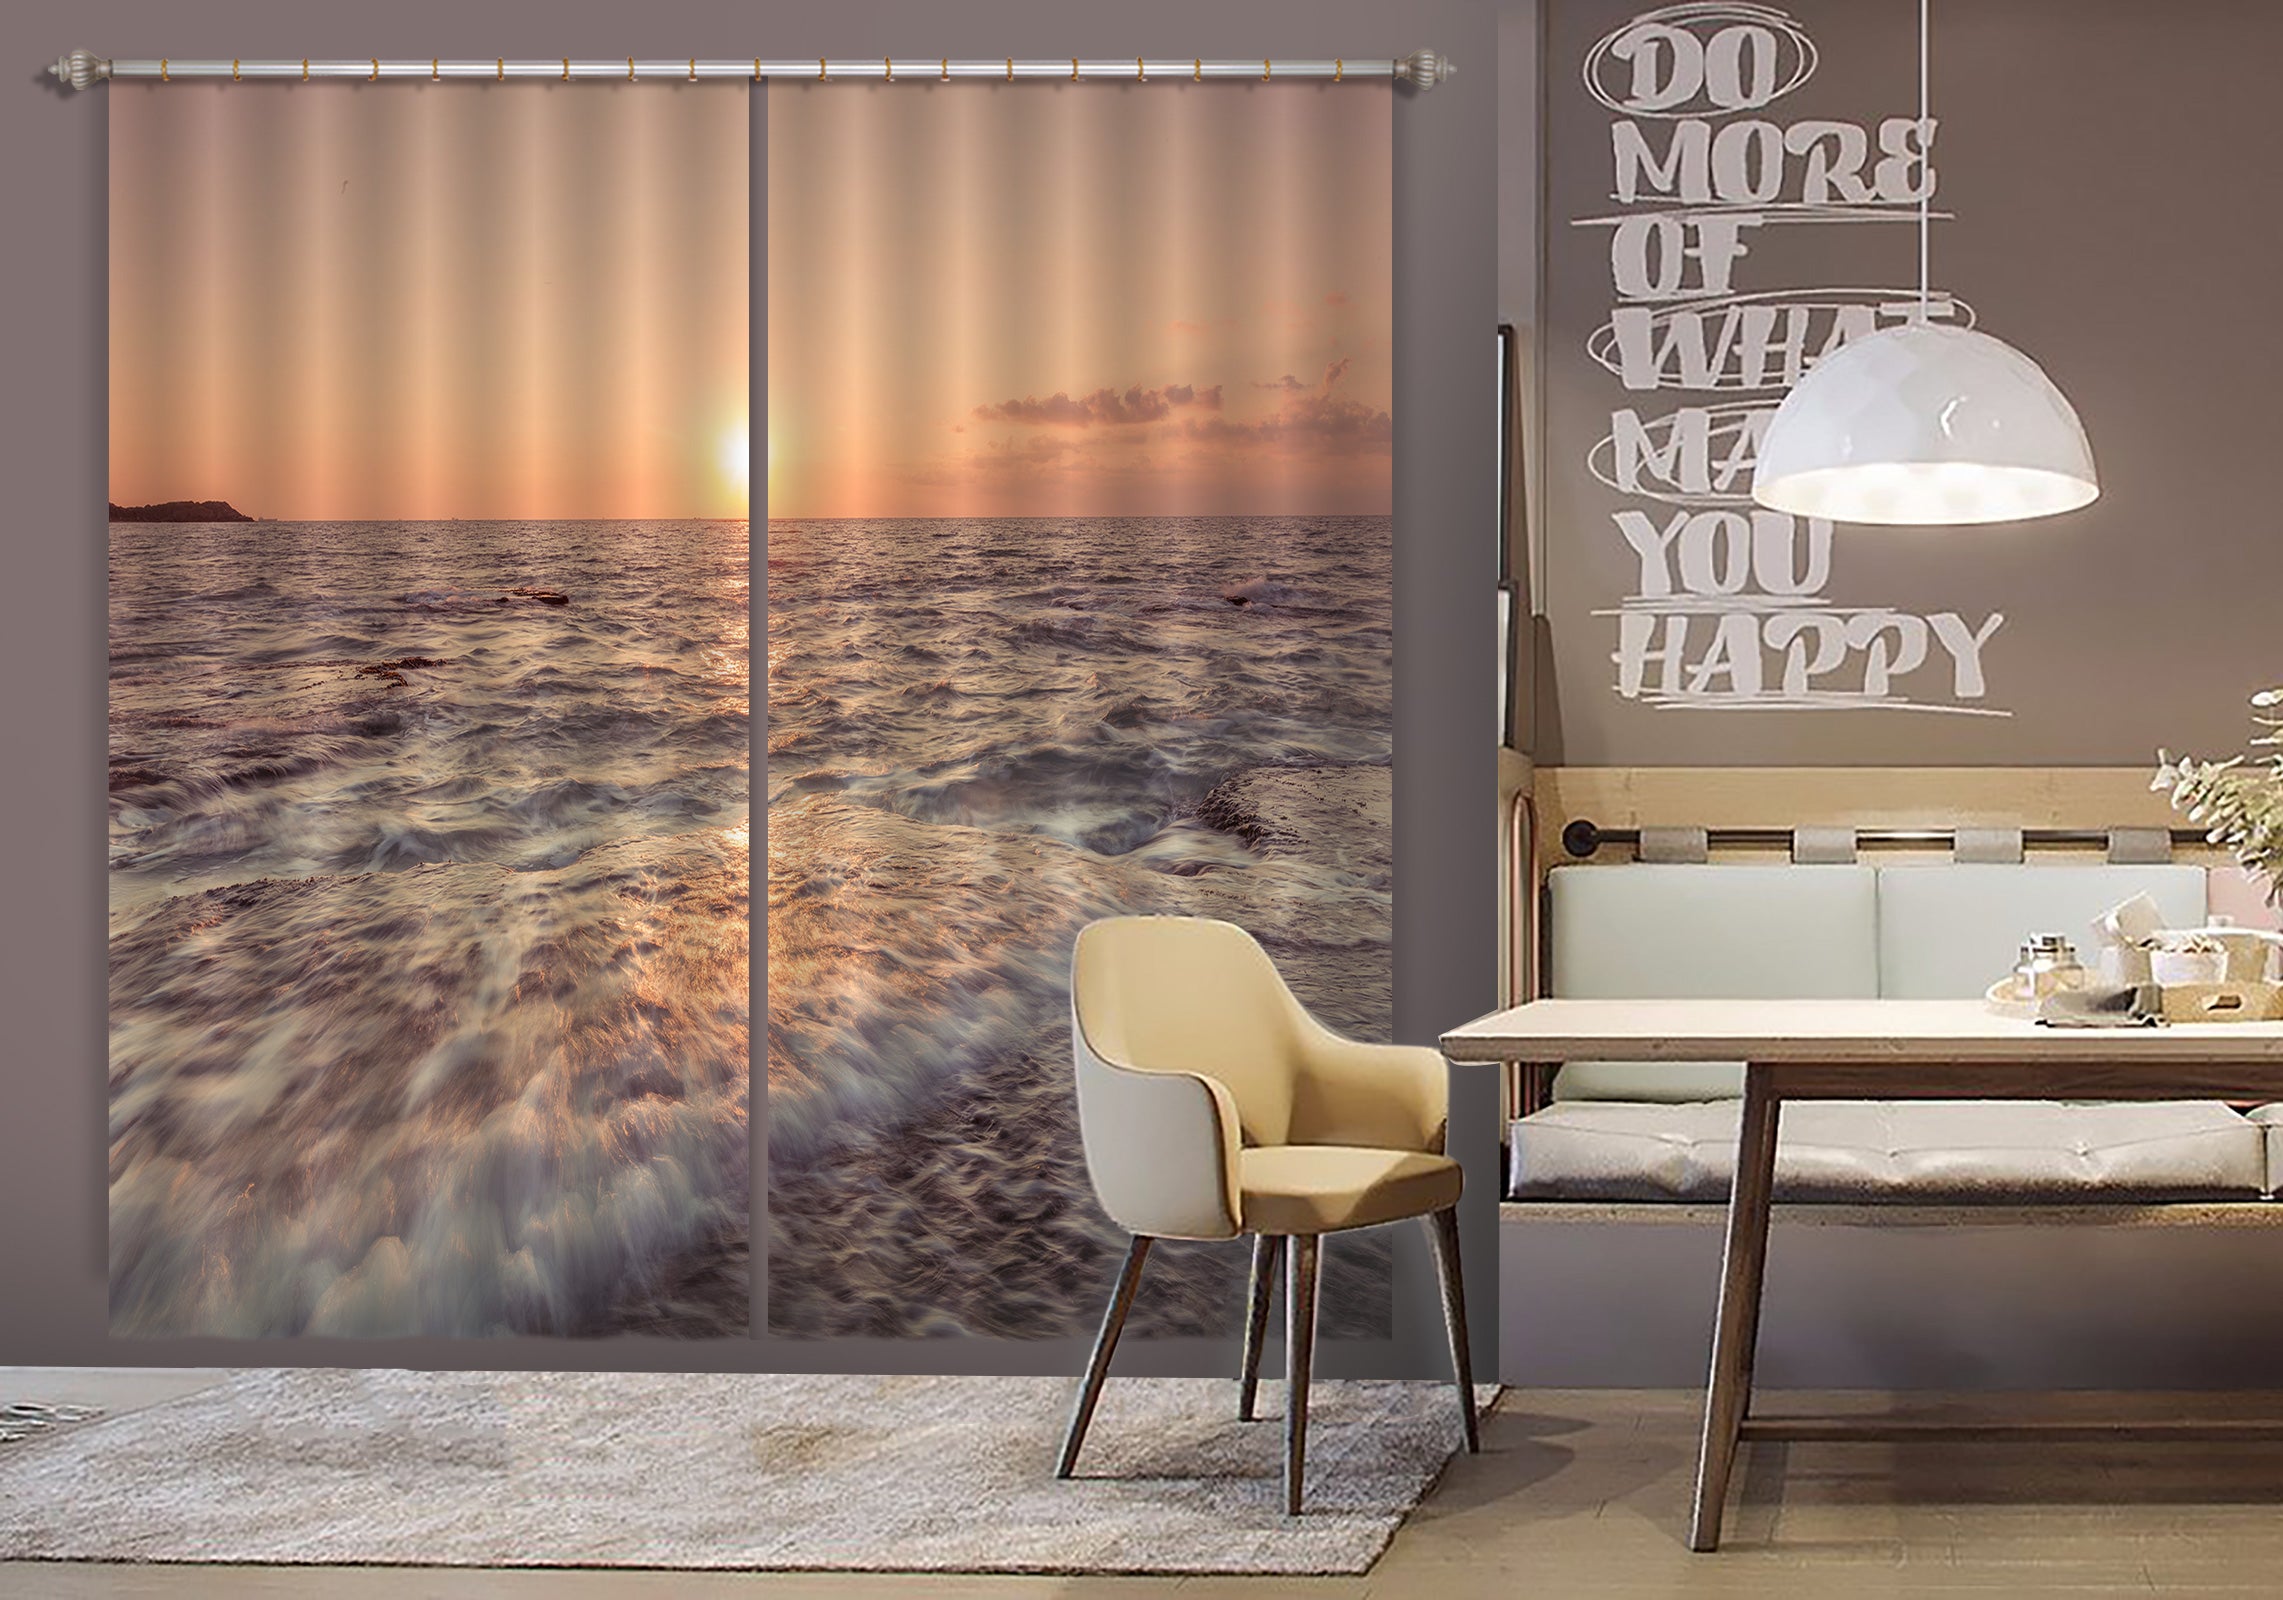 3D Sunset Beach 044 Assaf Frank Curtain Curtains Drapes